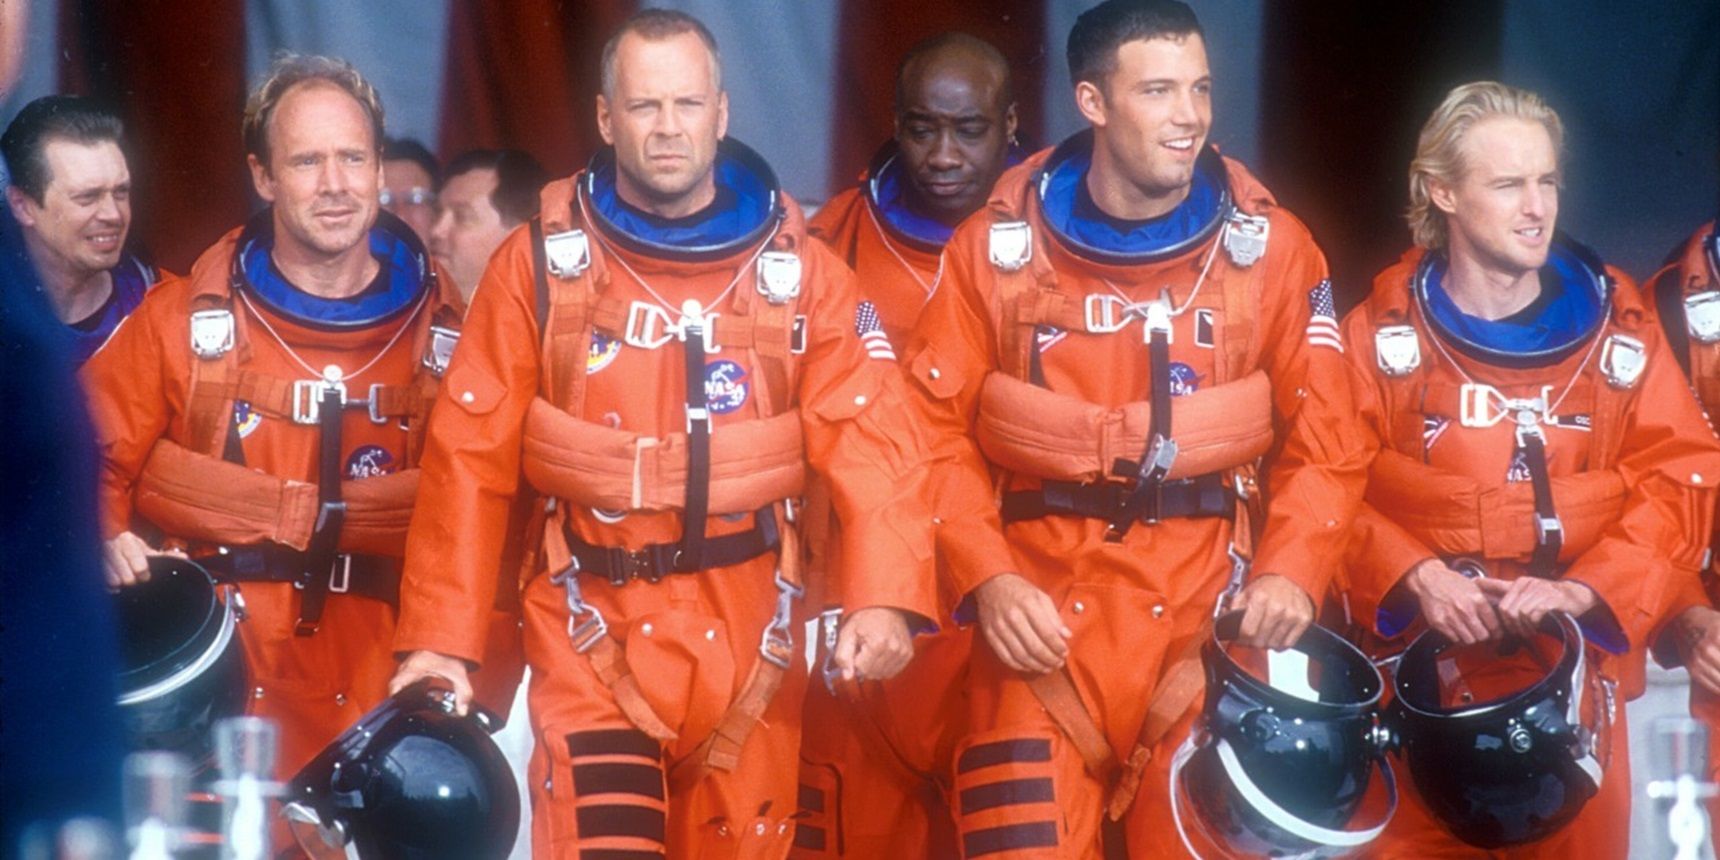 Astronauts at Armageddon